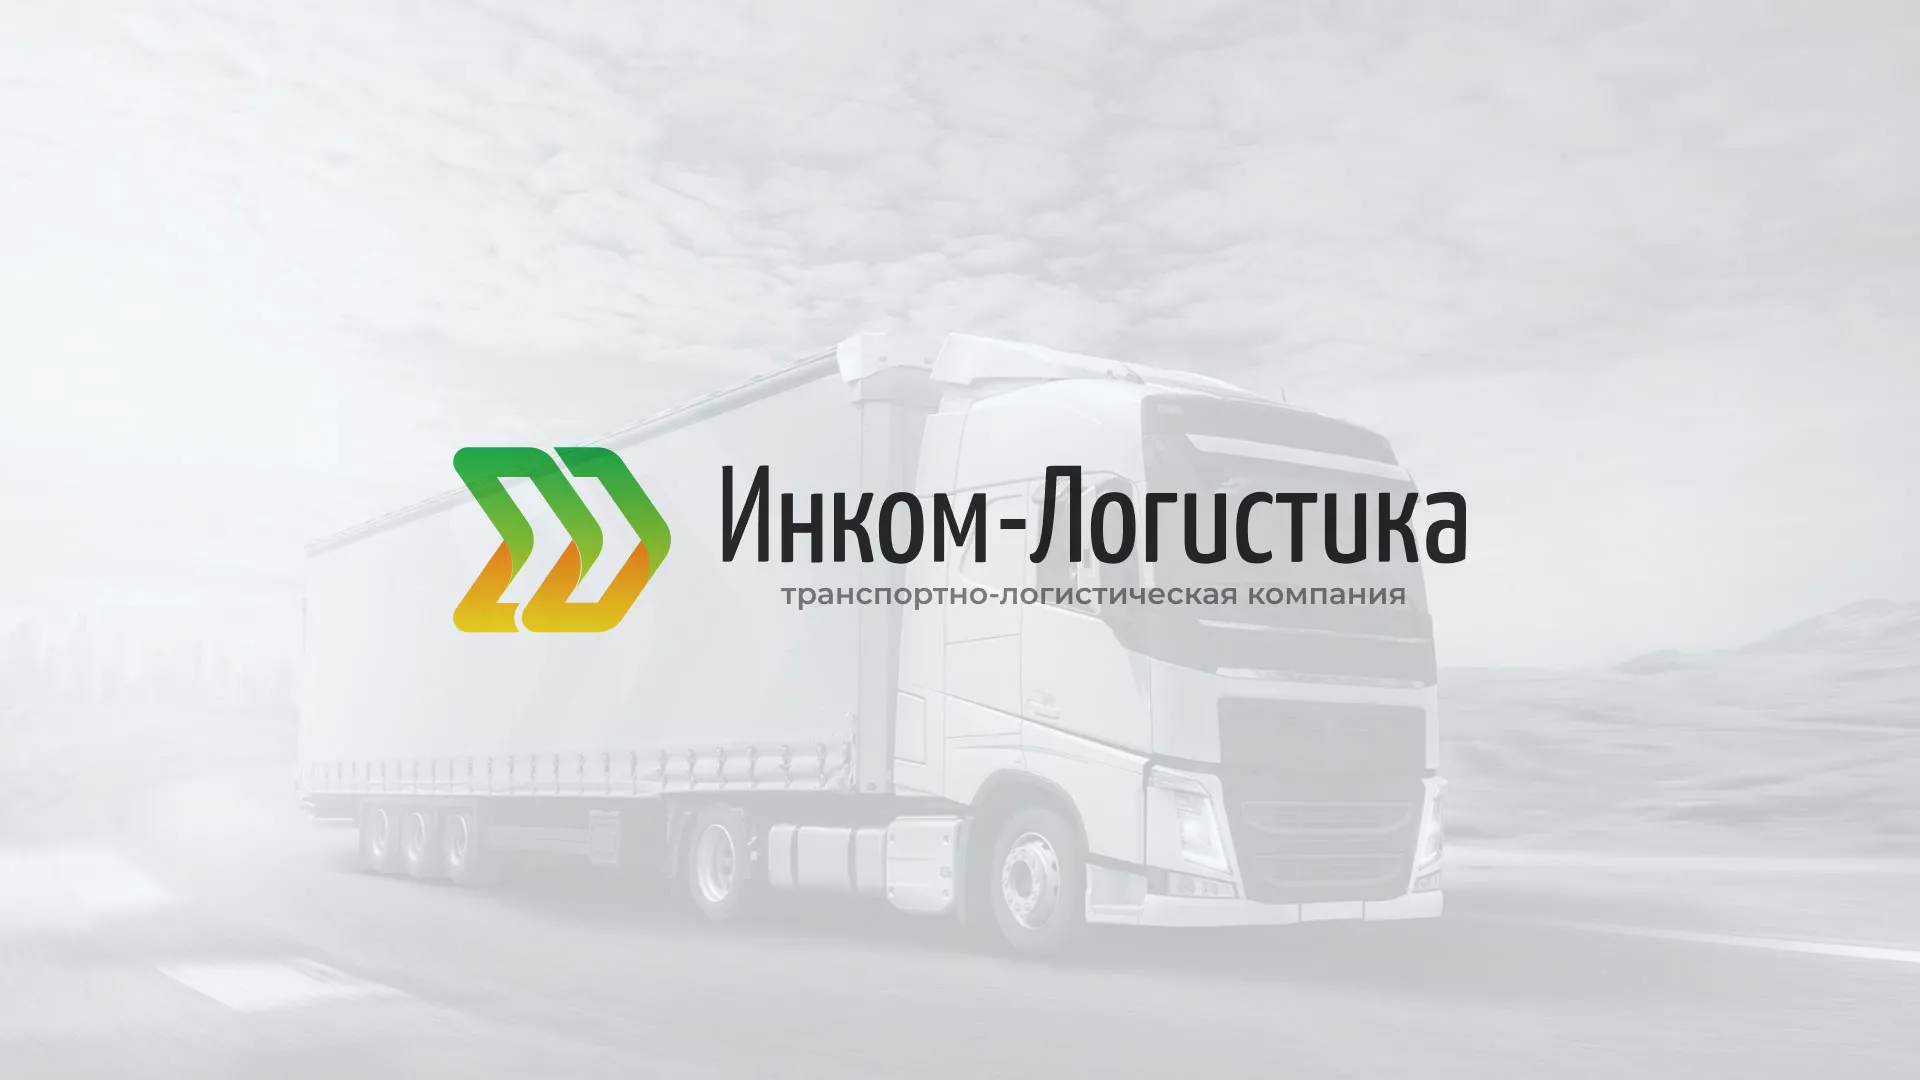 Разработка логотипа и сайта компании «Инком-Логистика» в Мурманске